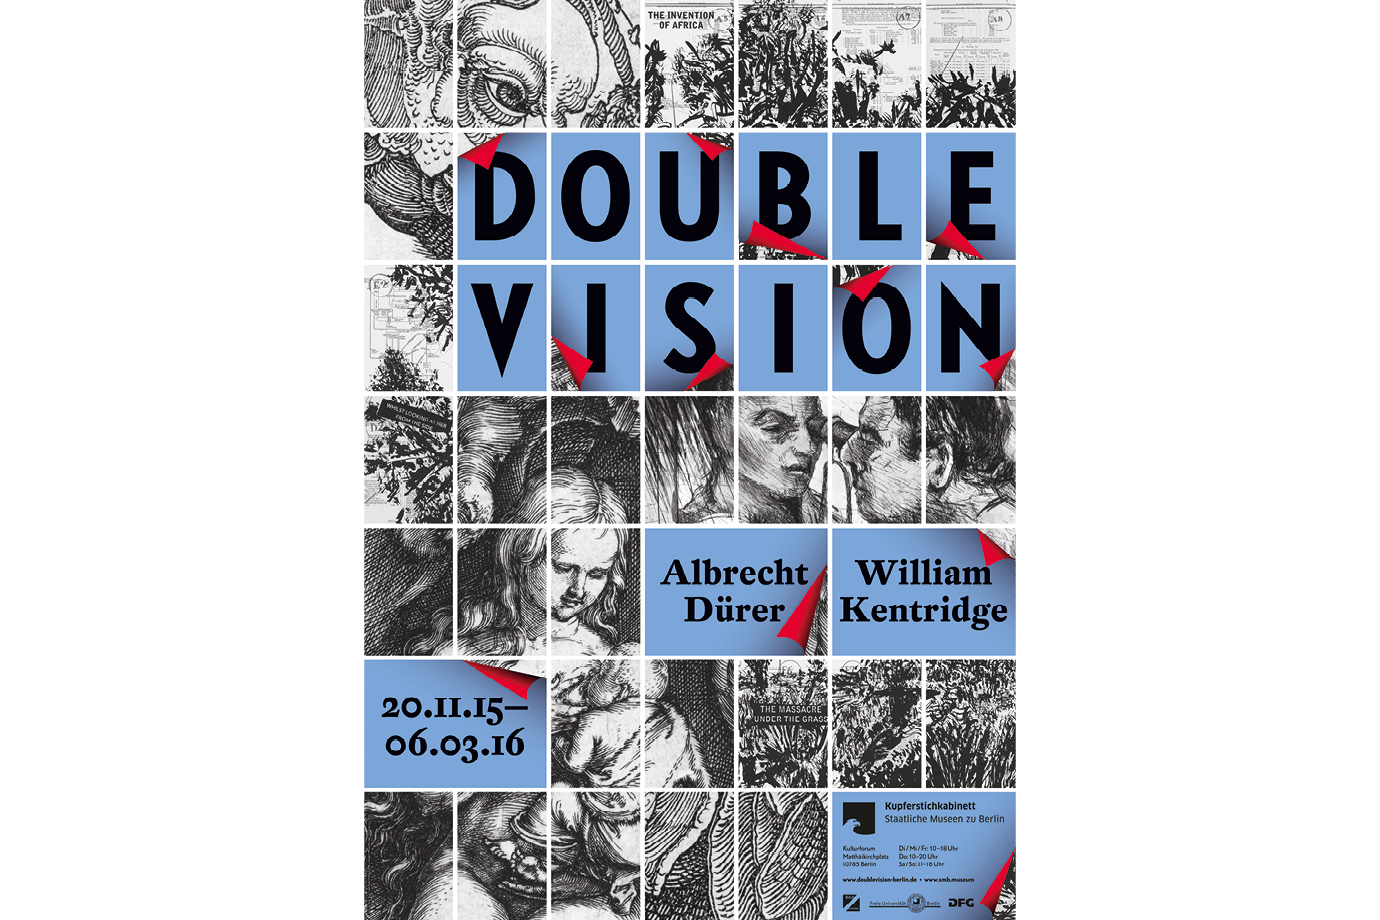 https://e-o-t.de/wordpress/wp-content/uploads/2017/01/2014_eot-DoubleVision-Poster-0.jpg